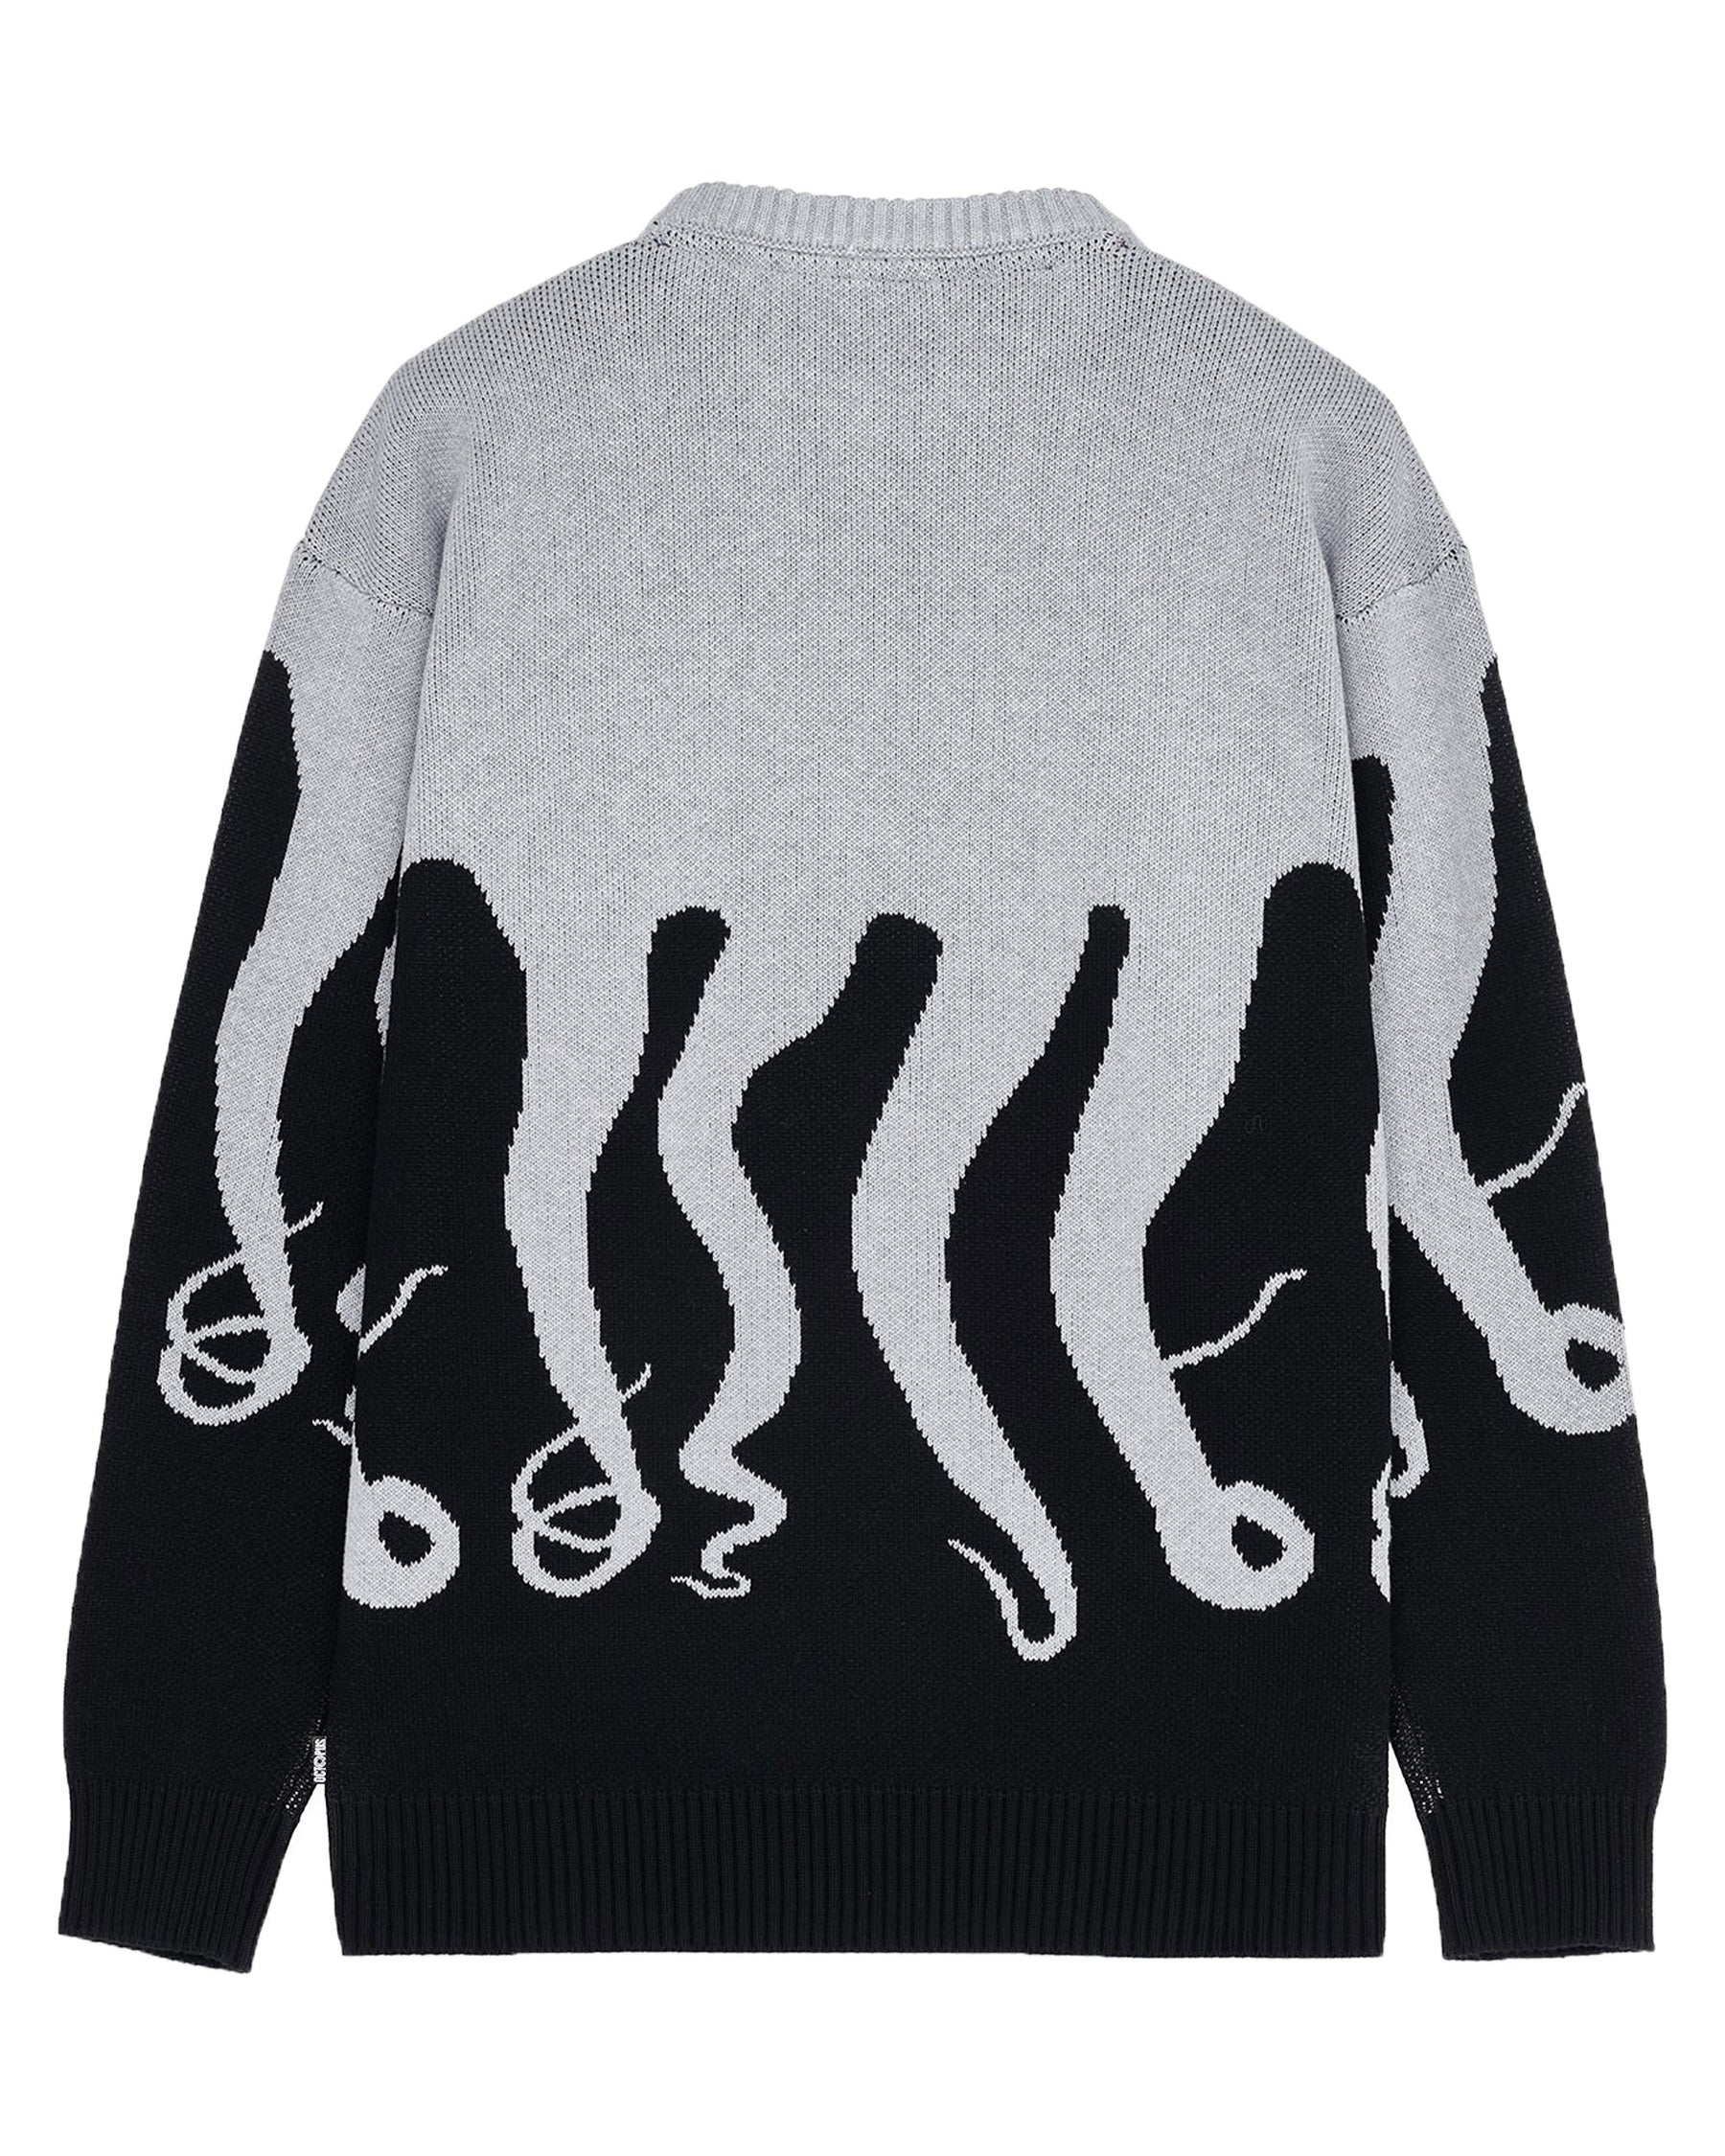 Man Sweater Octopus Original Jumper Grey